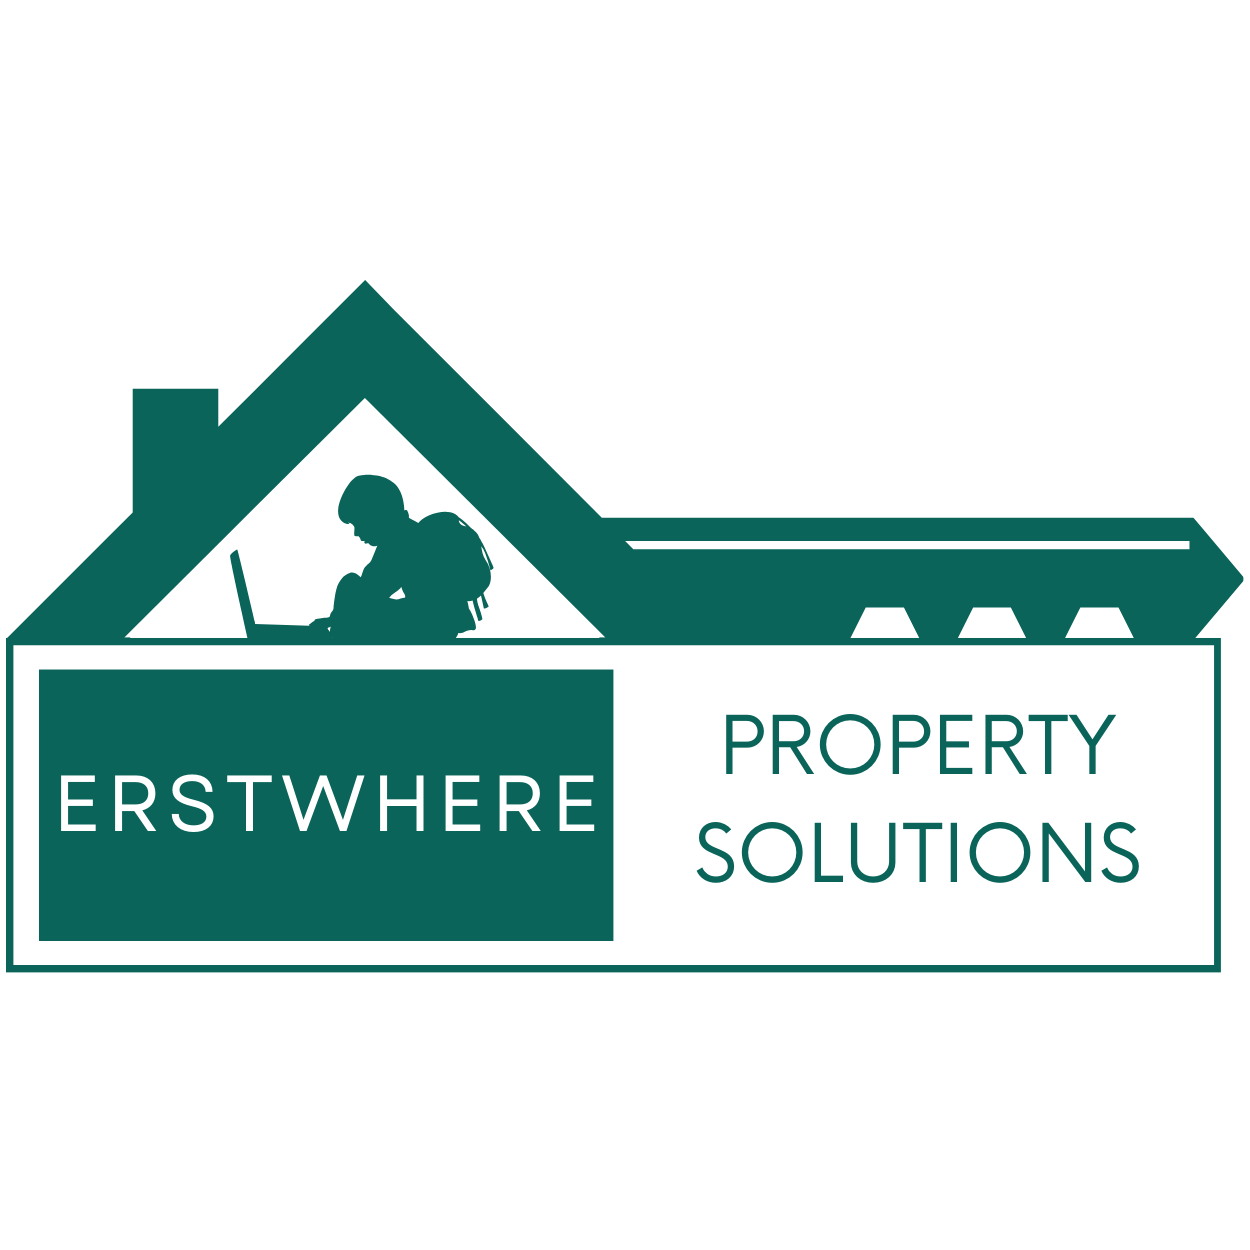 Erstwhere Property Solutions logo